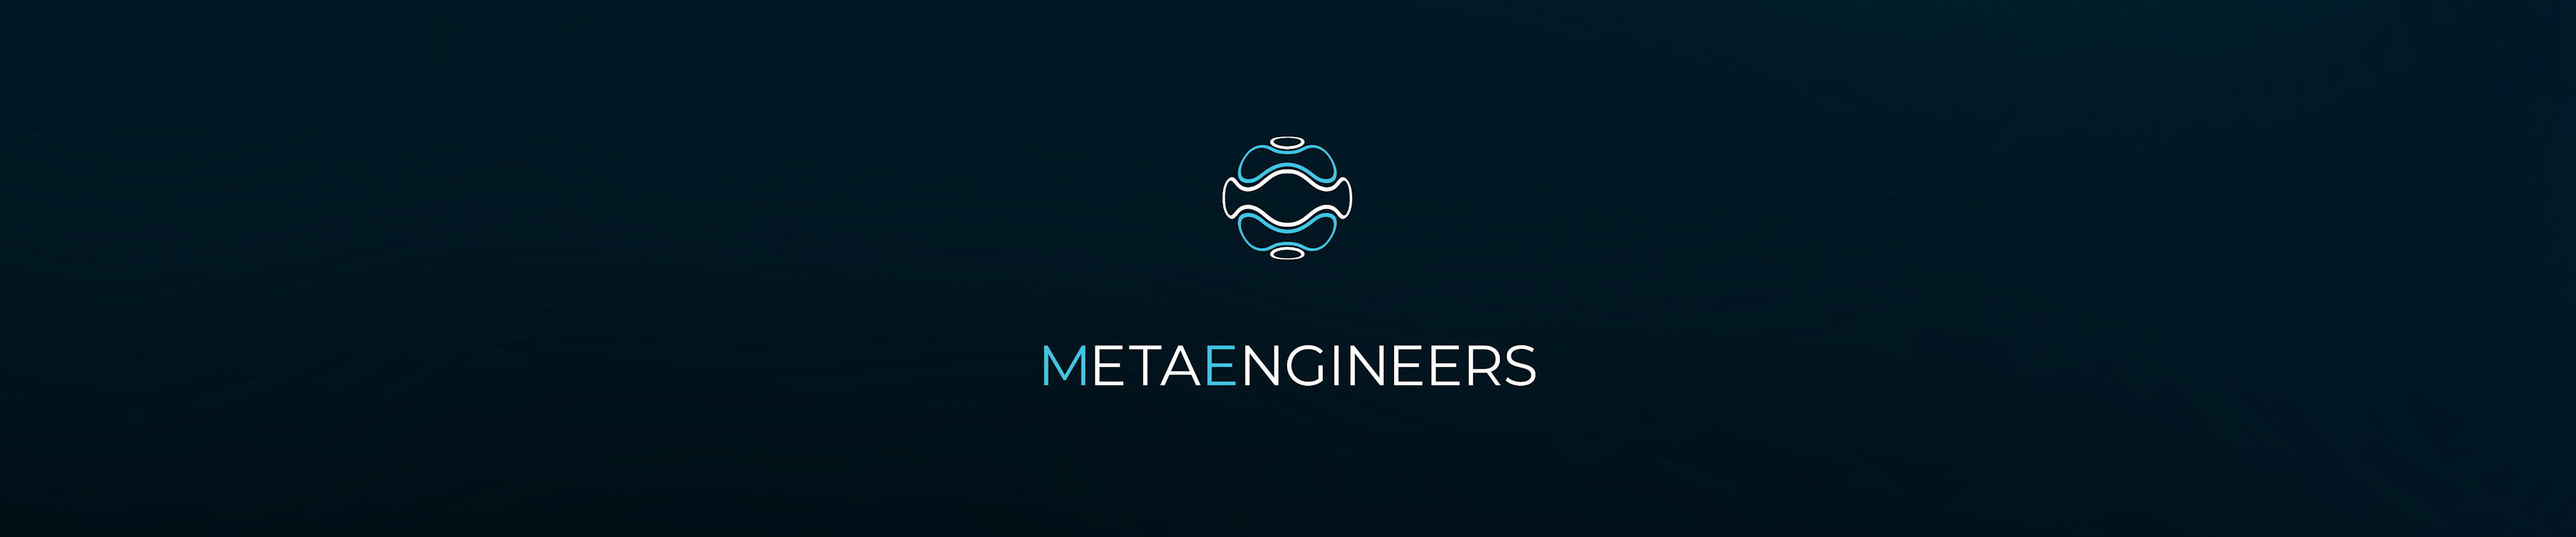 Web3 DAO | MetaEngineers logo